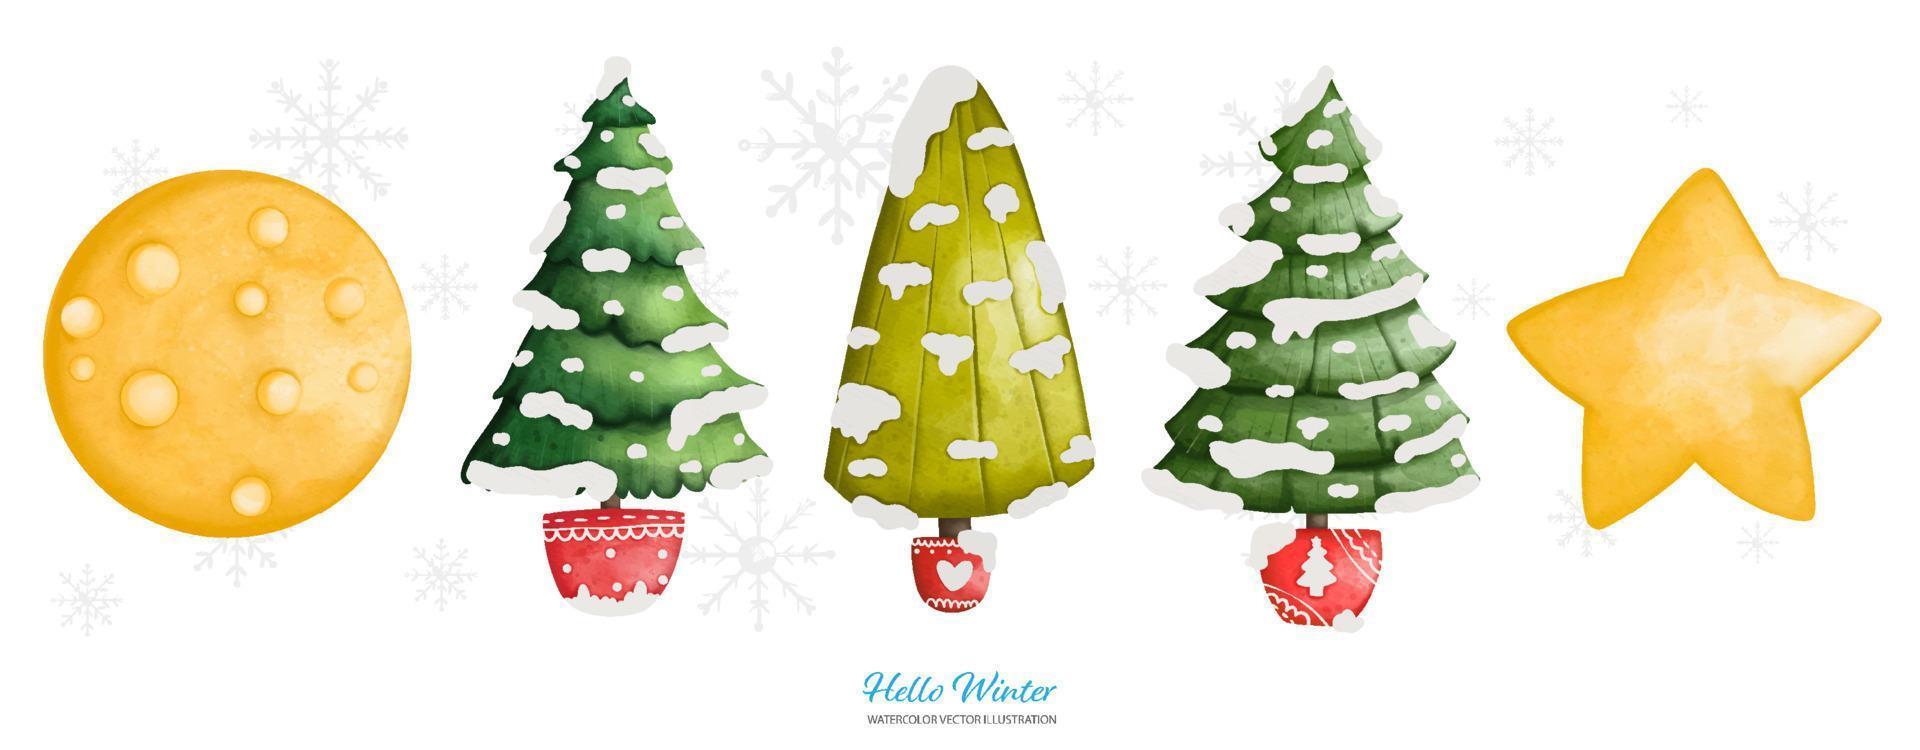 aquarellweihnachtsbaum und stern, aquarellvektorillustration vektor